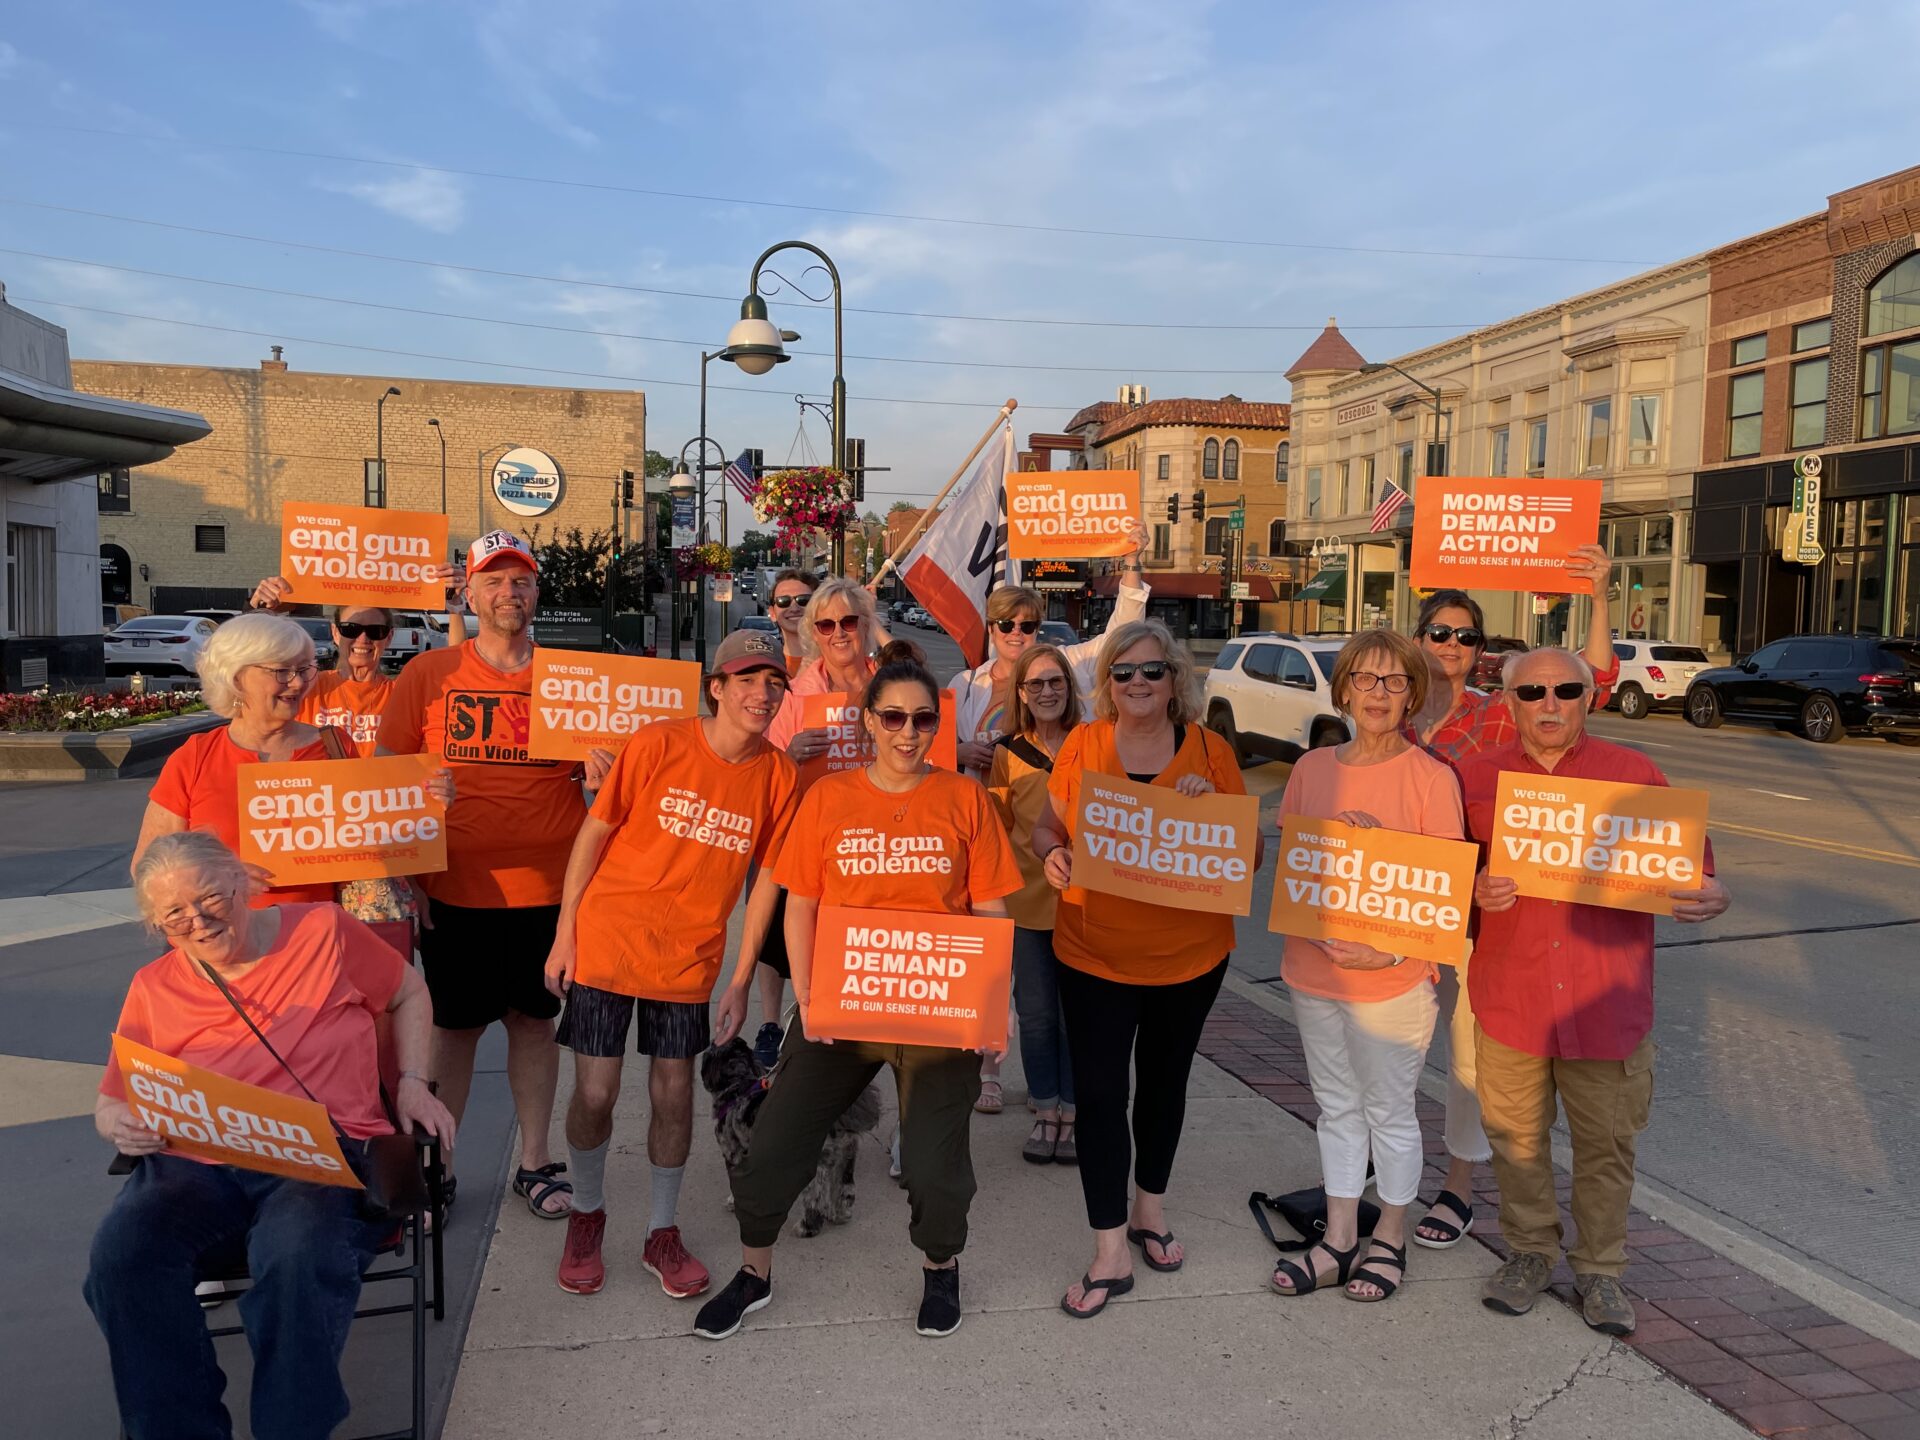 Team Linda Robertson at the St. Charles, IL Wear Orange Gathering to End gun Violence